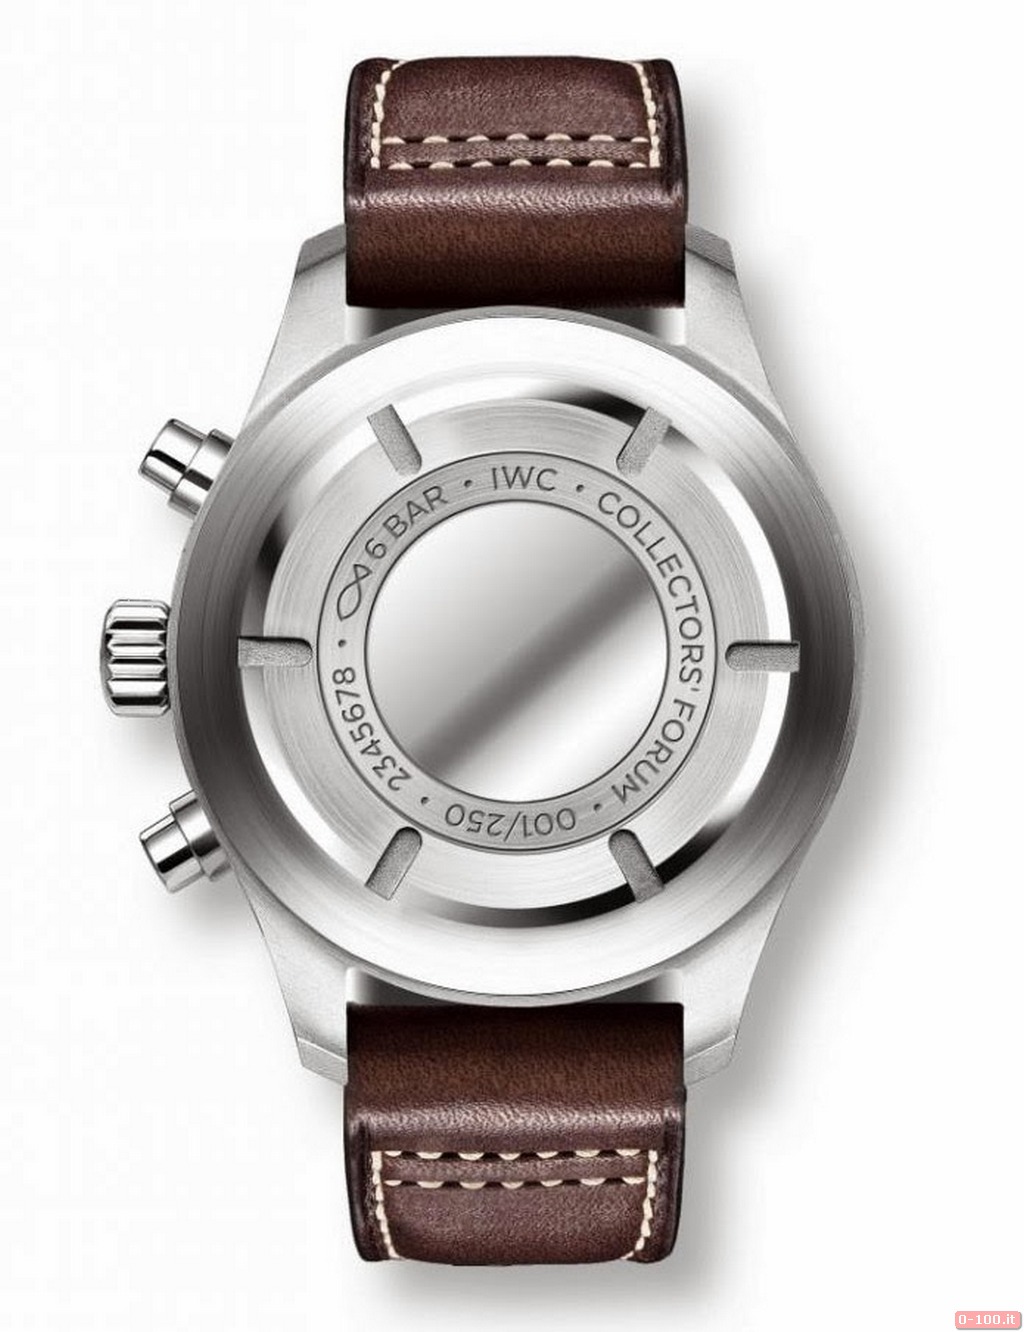 iwc-pilots-watch-chronograph-collectors-watch-edition-prezzo-price0-100_4